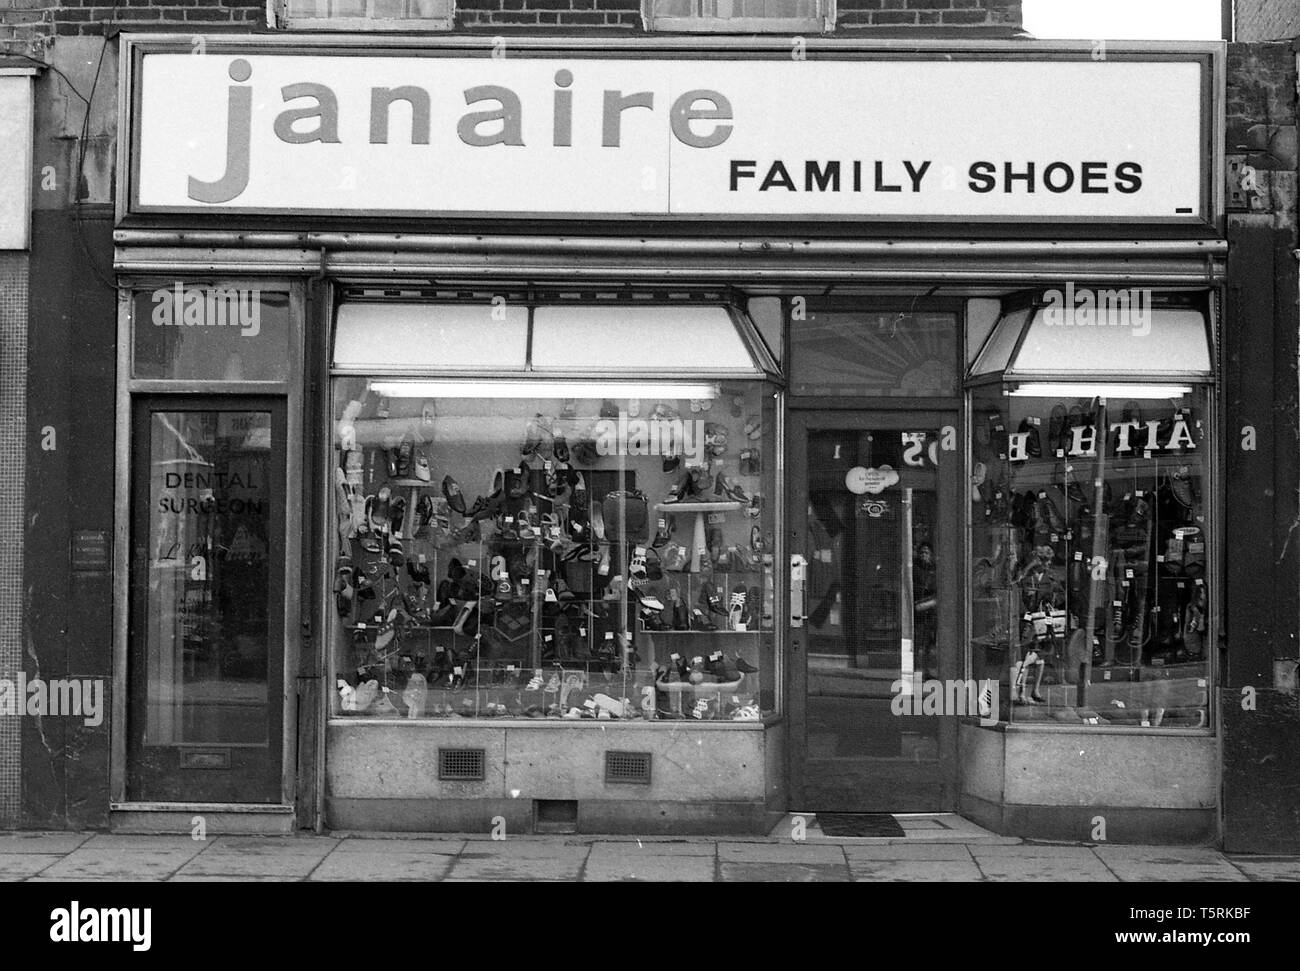 Janaire Family Shoes Shoe Shop at 216, Trafalgar Road, Greenwich. c1974. Photo by Tony Henshaw Stock Photo